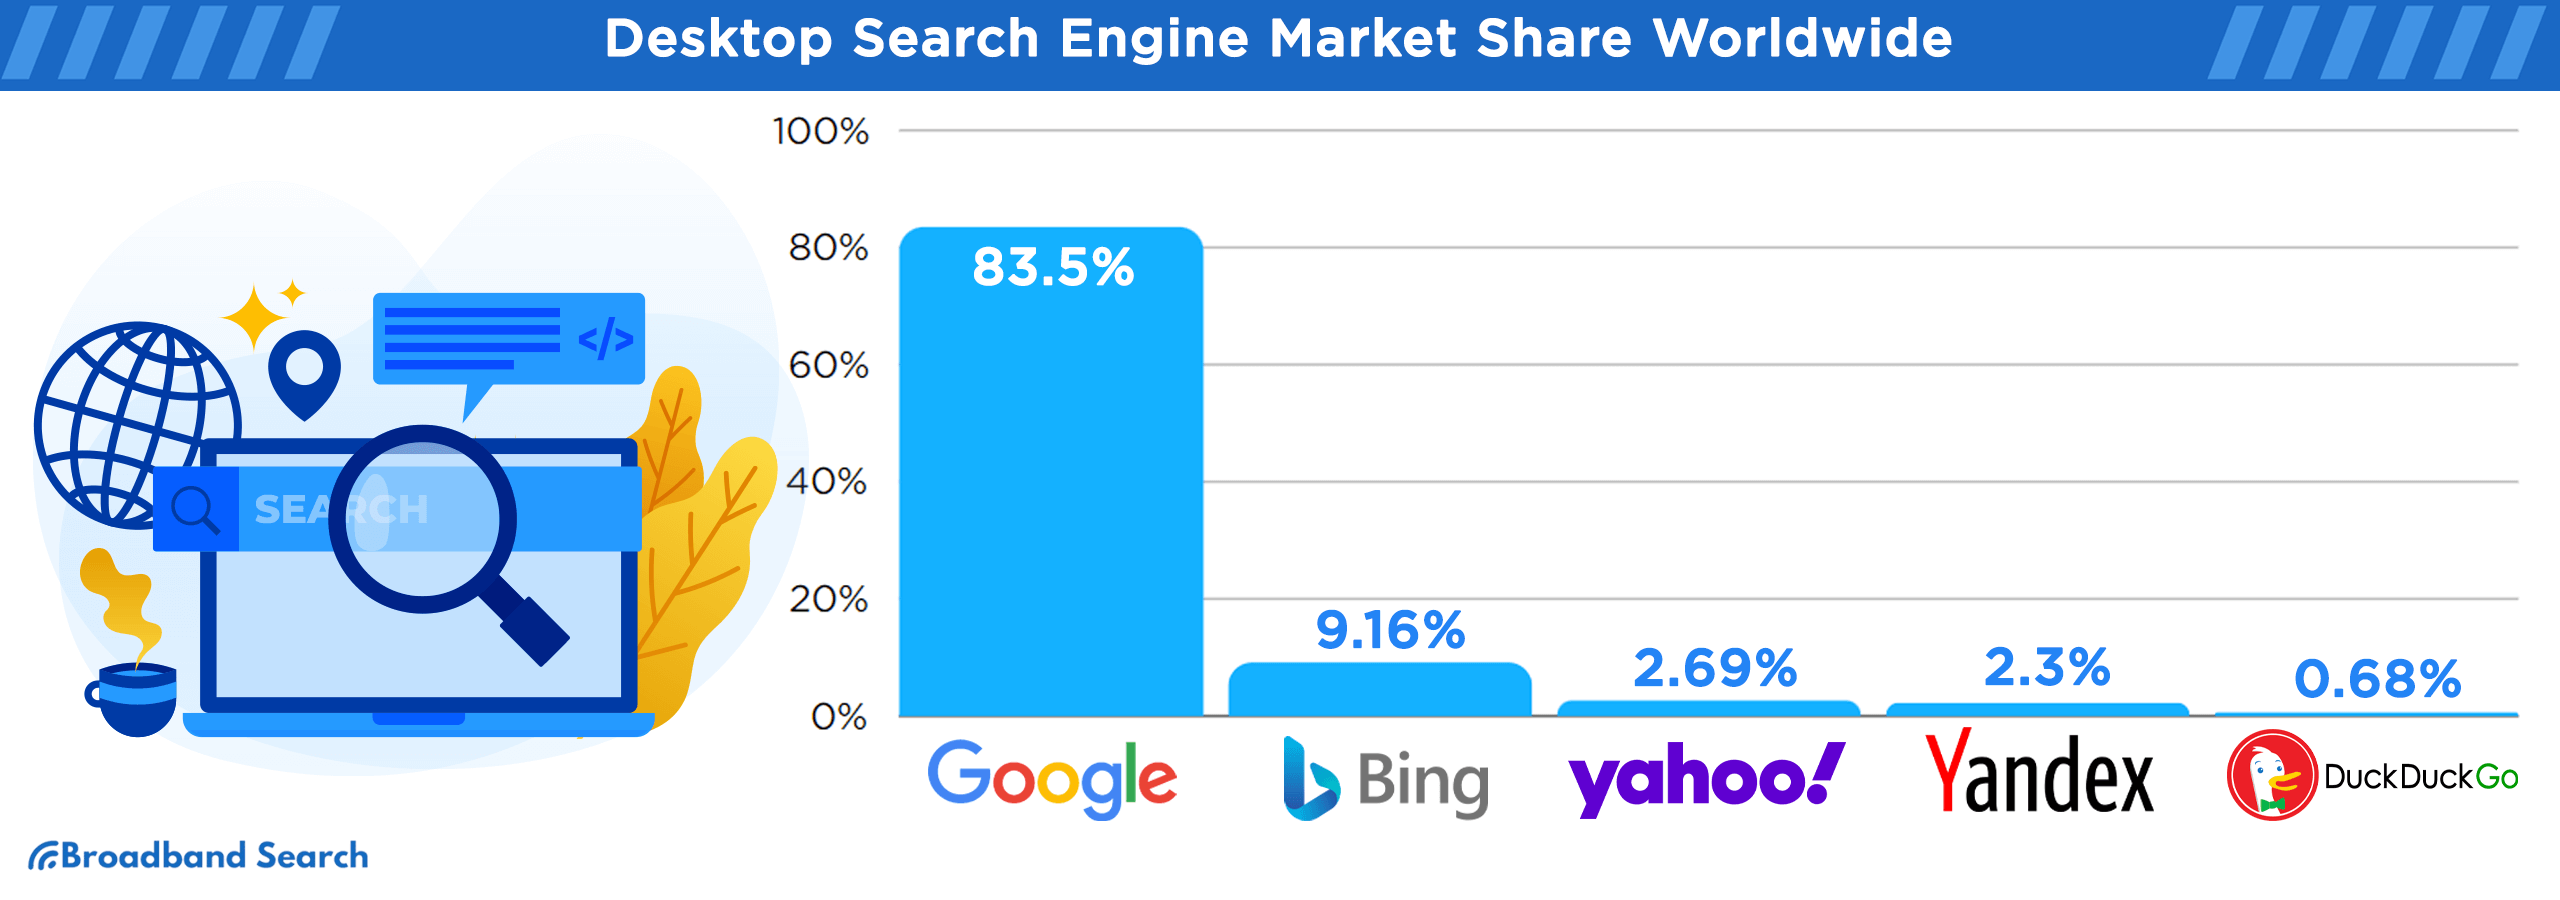 Desktop search engine market share worldwide